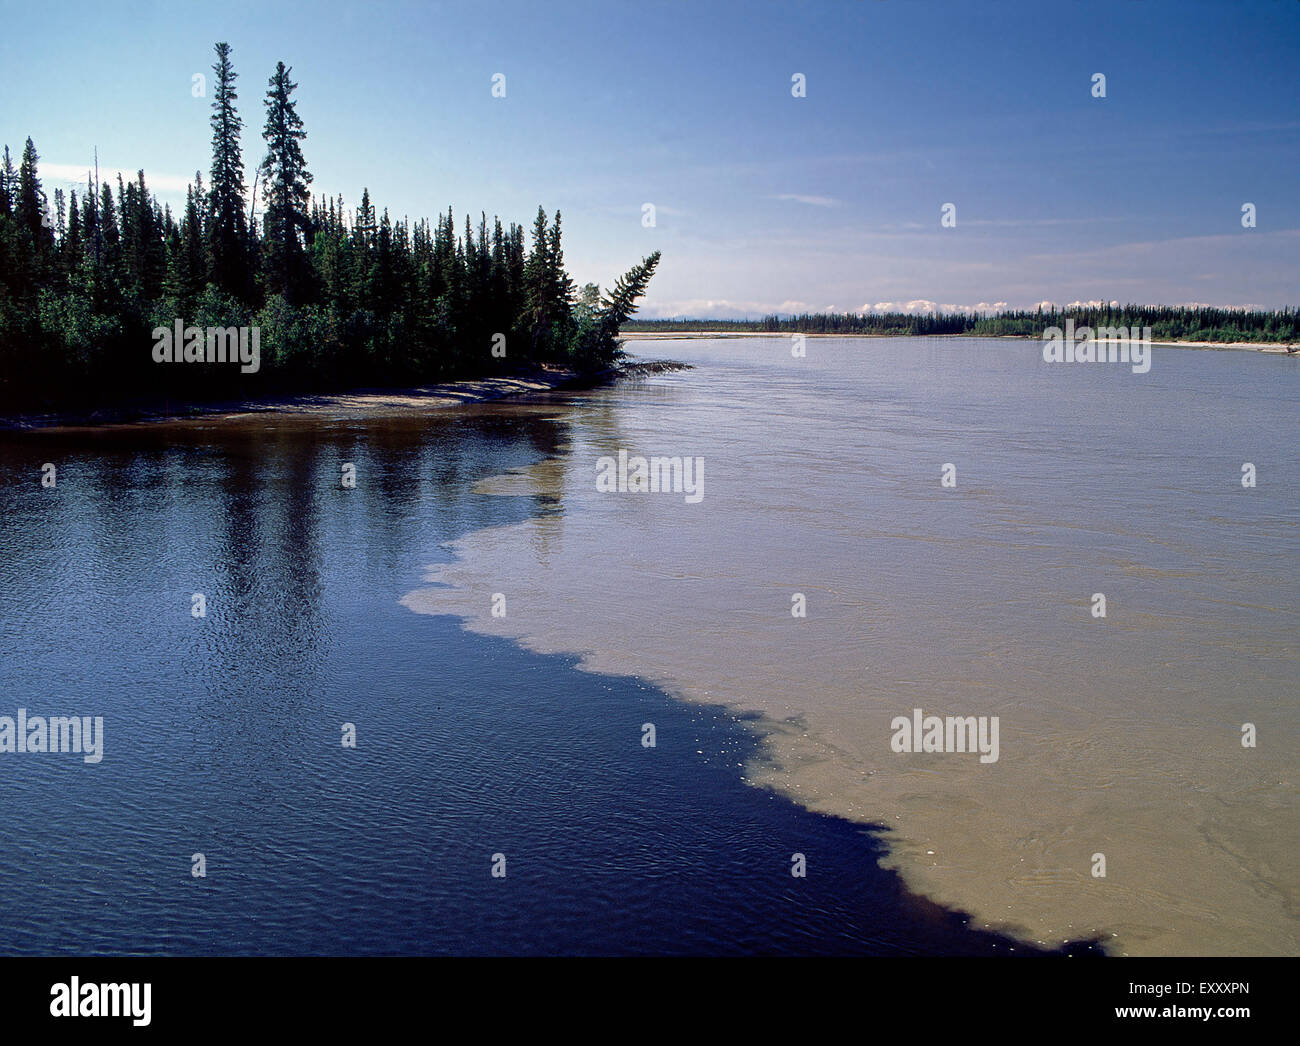 Tanana river alaska hi-res stock photography and images - Alamy